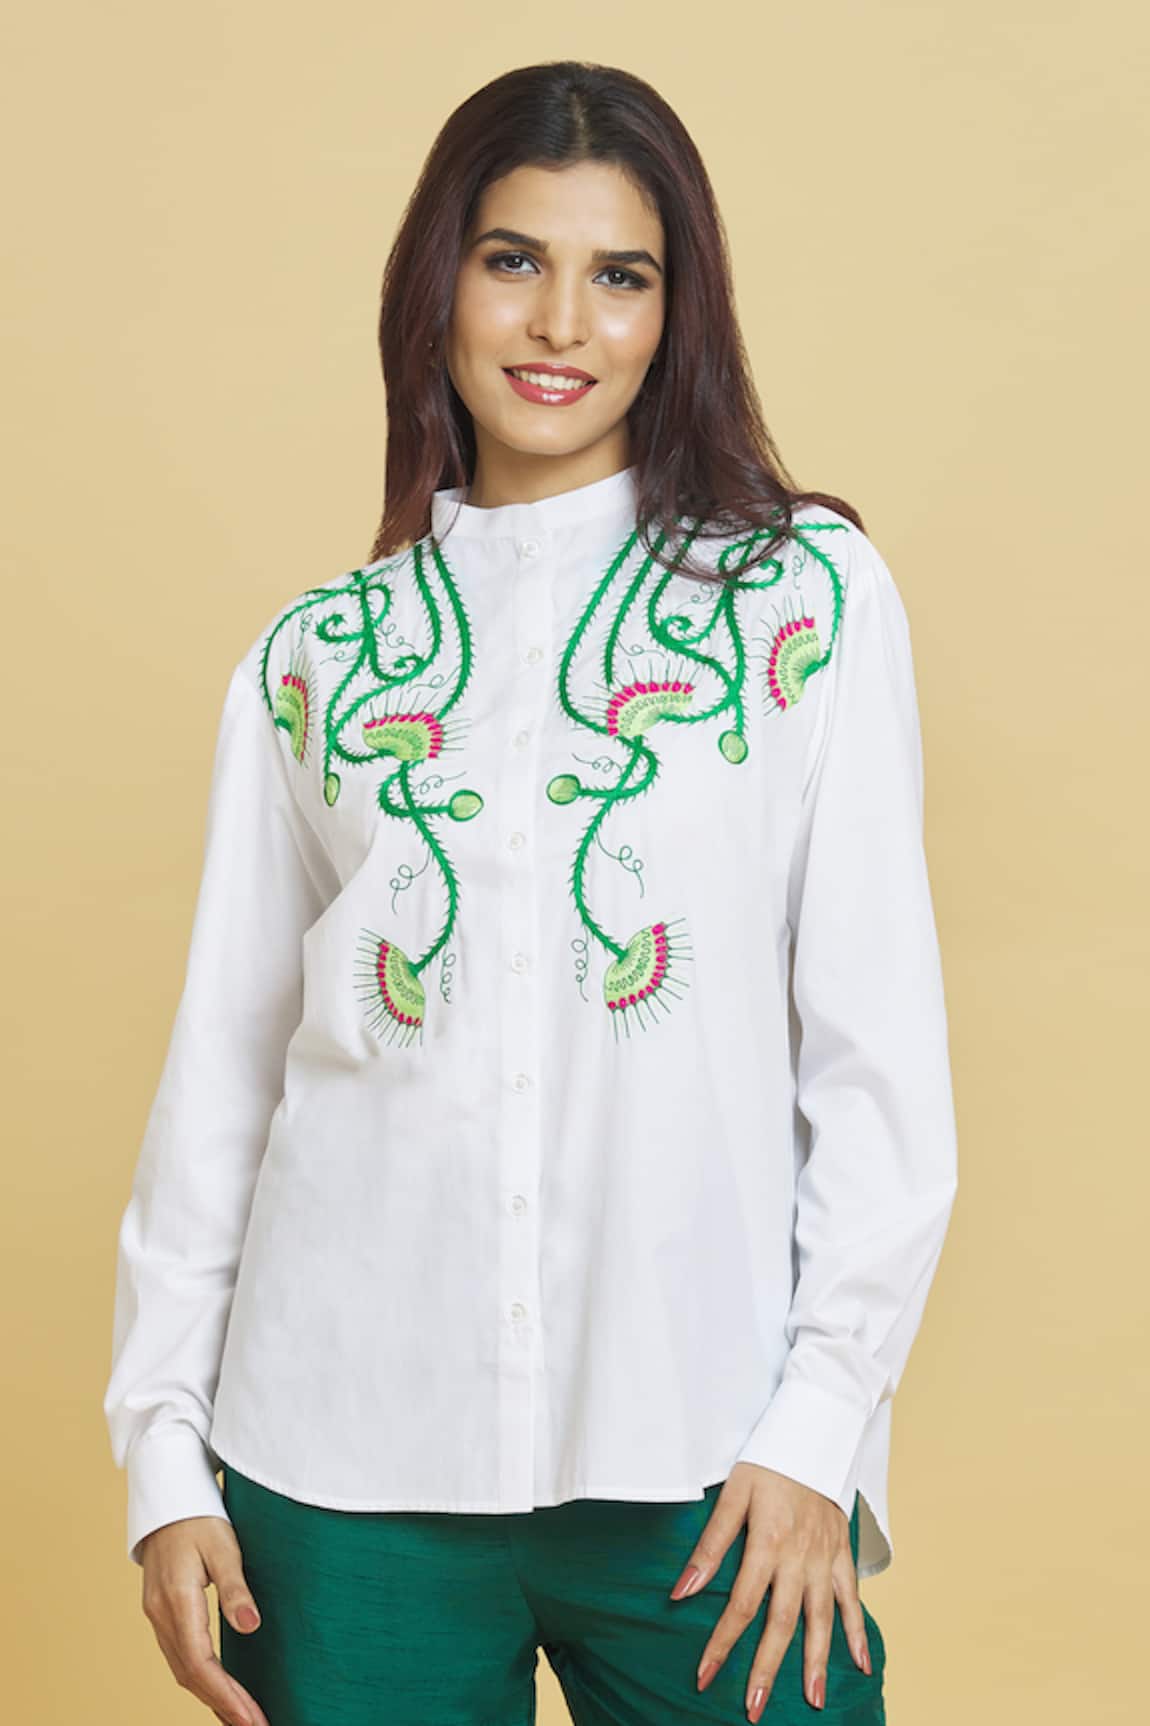 Aiman Venus Flytrap Embroidered Shirt